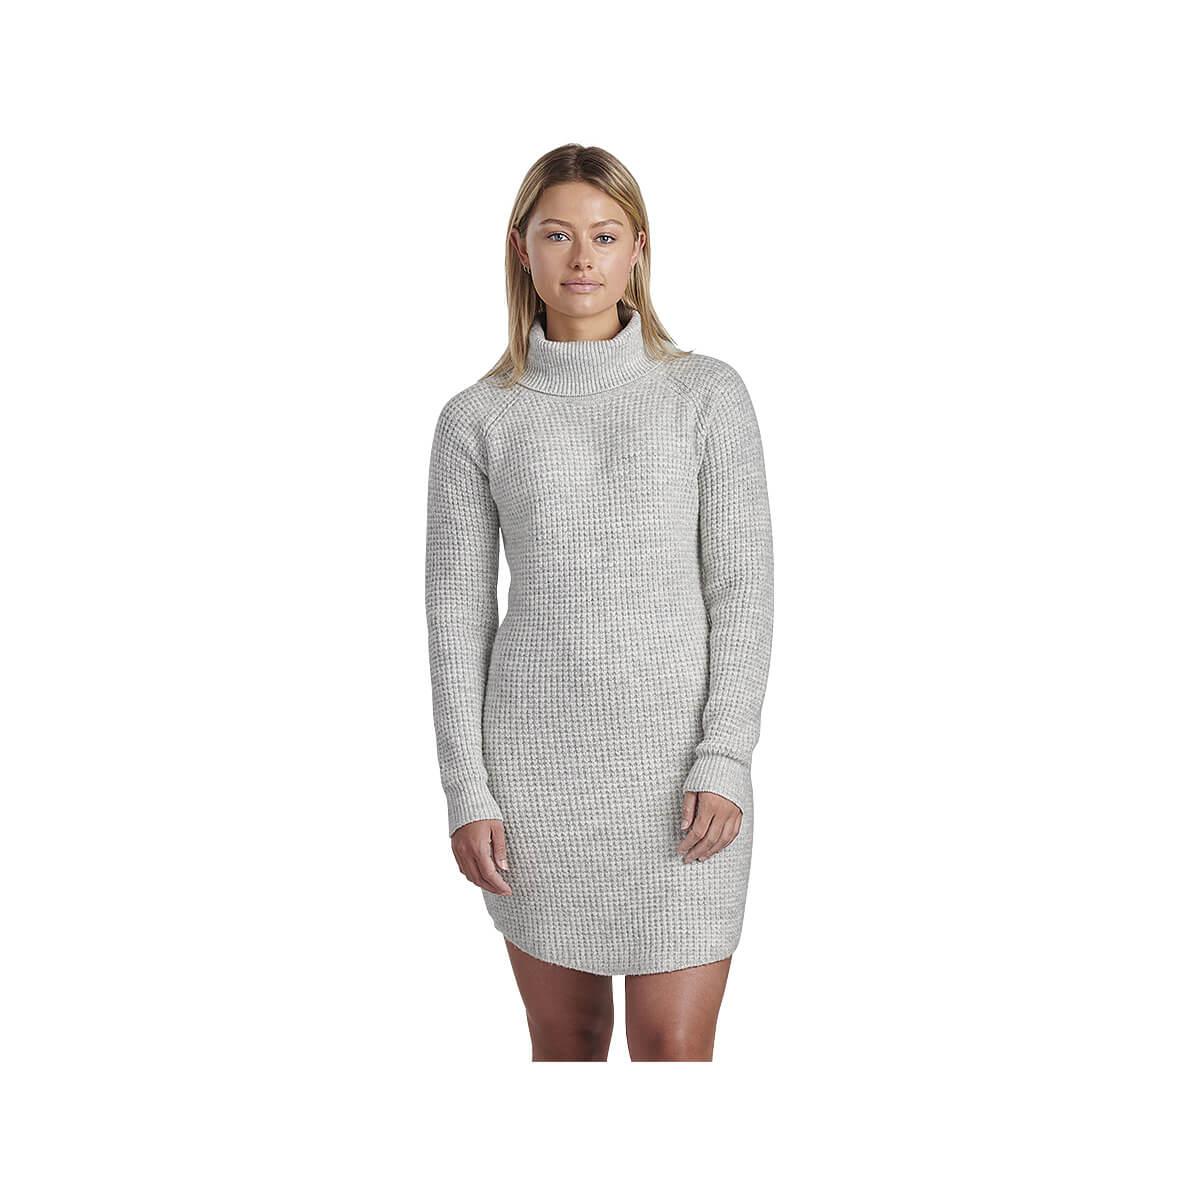 Mast General Store  Women's Sienna Long Sleeve Sweater Dress